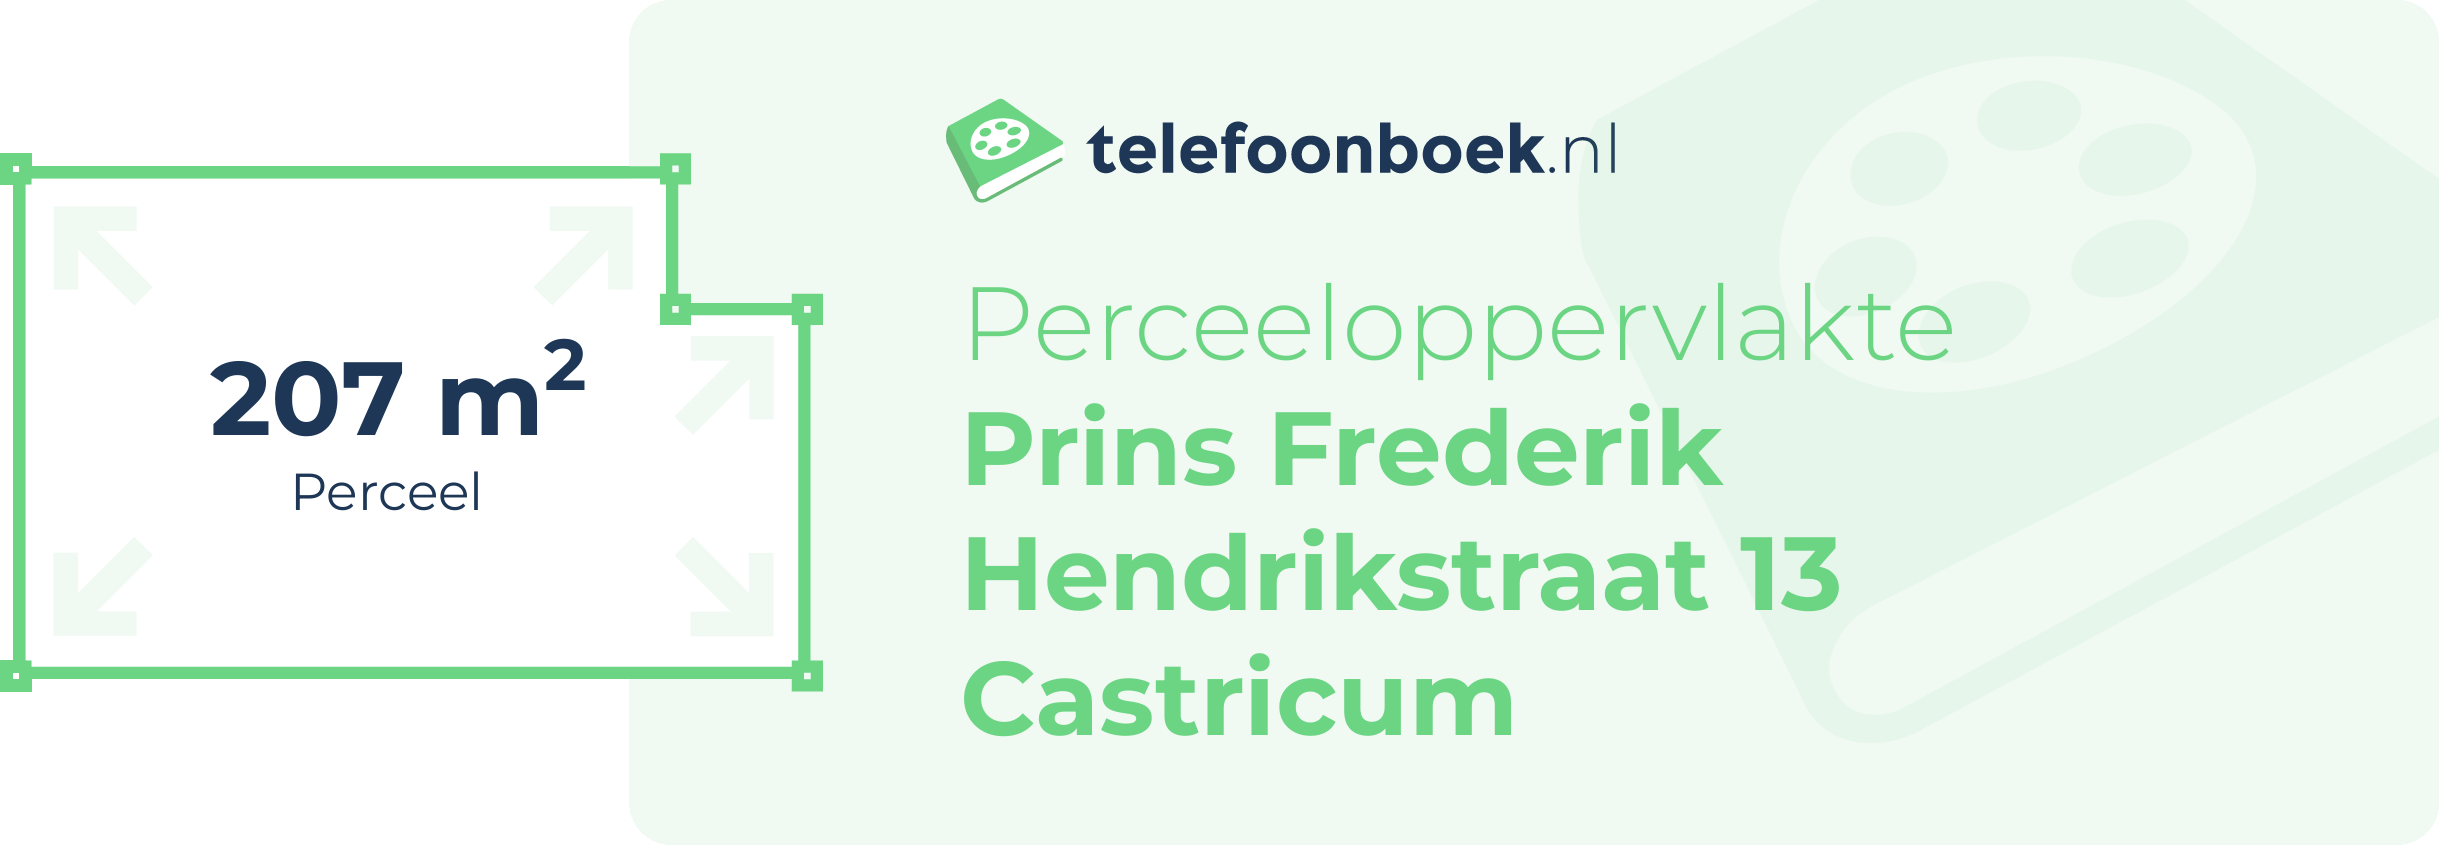 Perceeloppervlakte Prins Frederik Hendrikstraat 13 Castricum